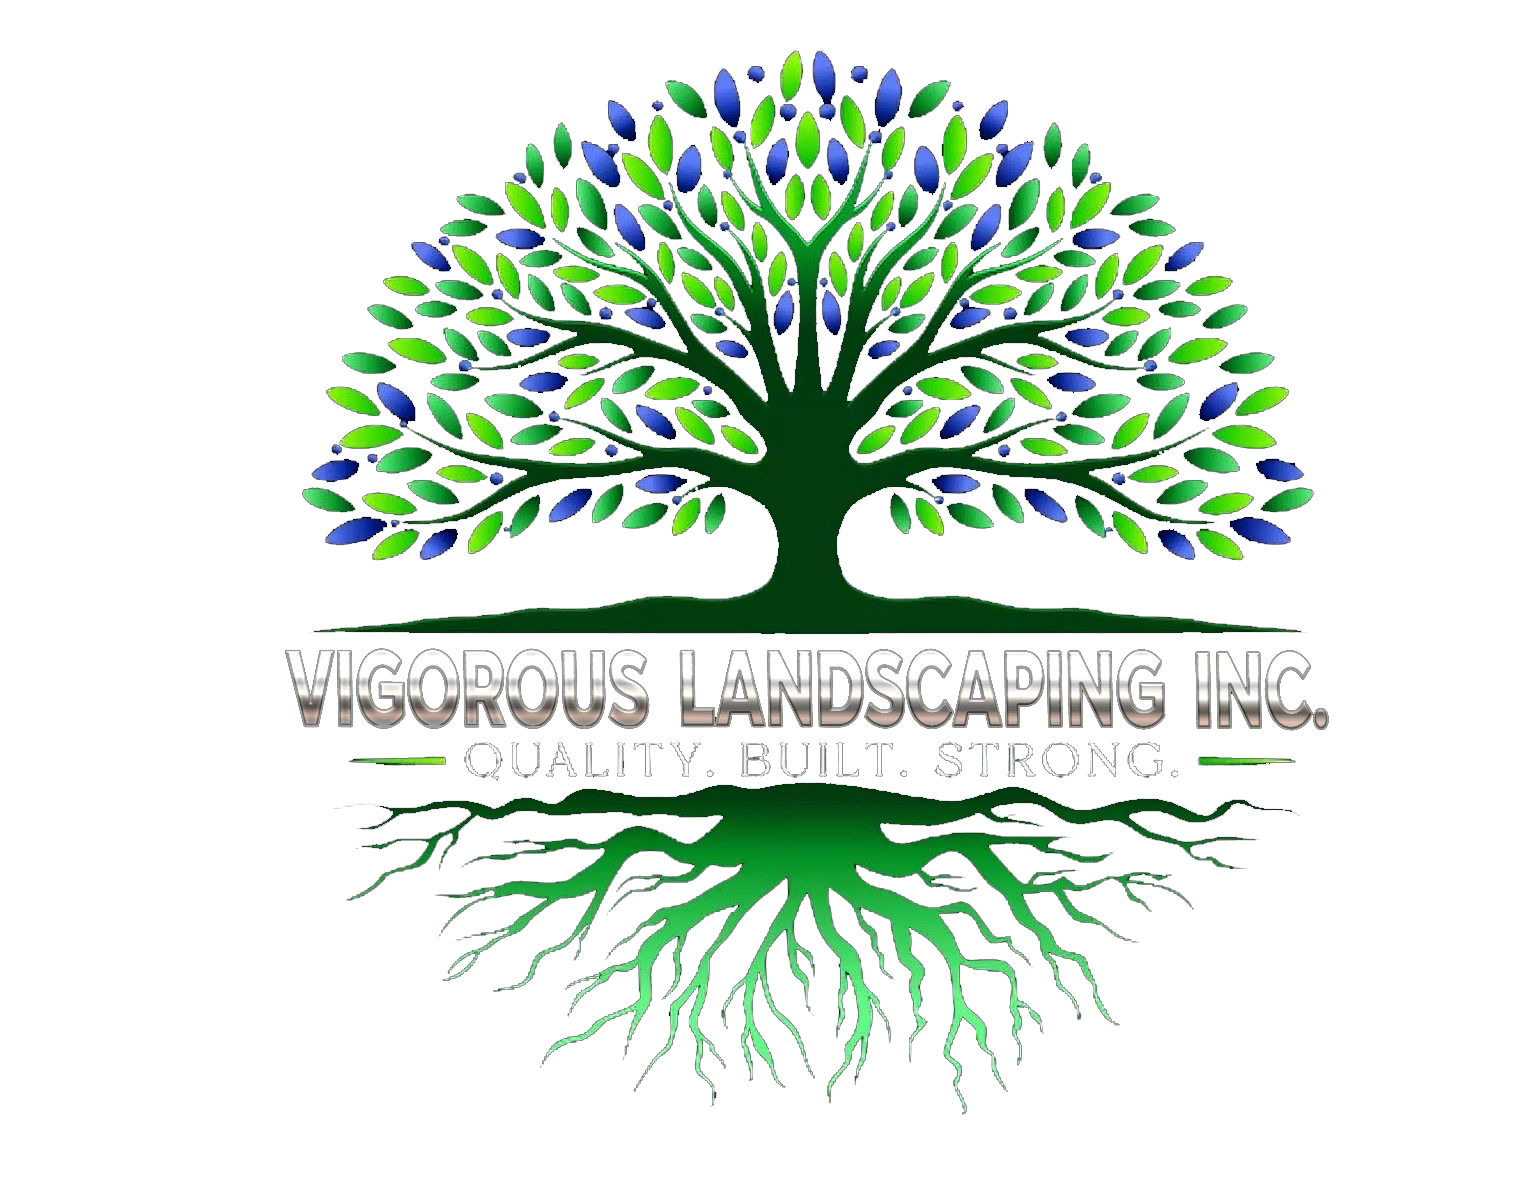 Vigorous Landscaping Inc.